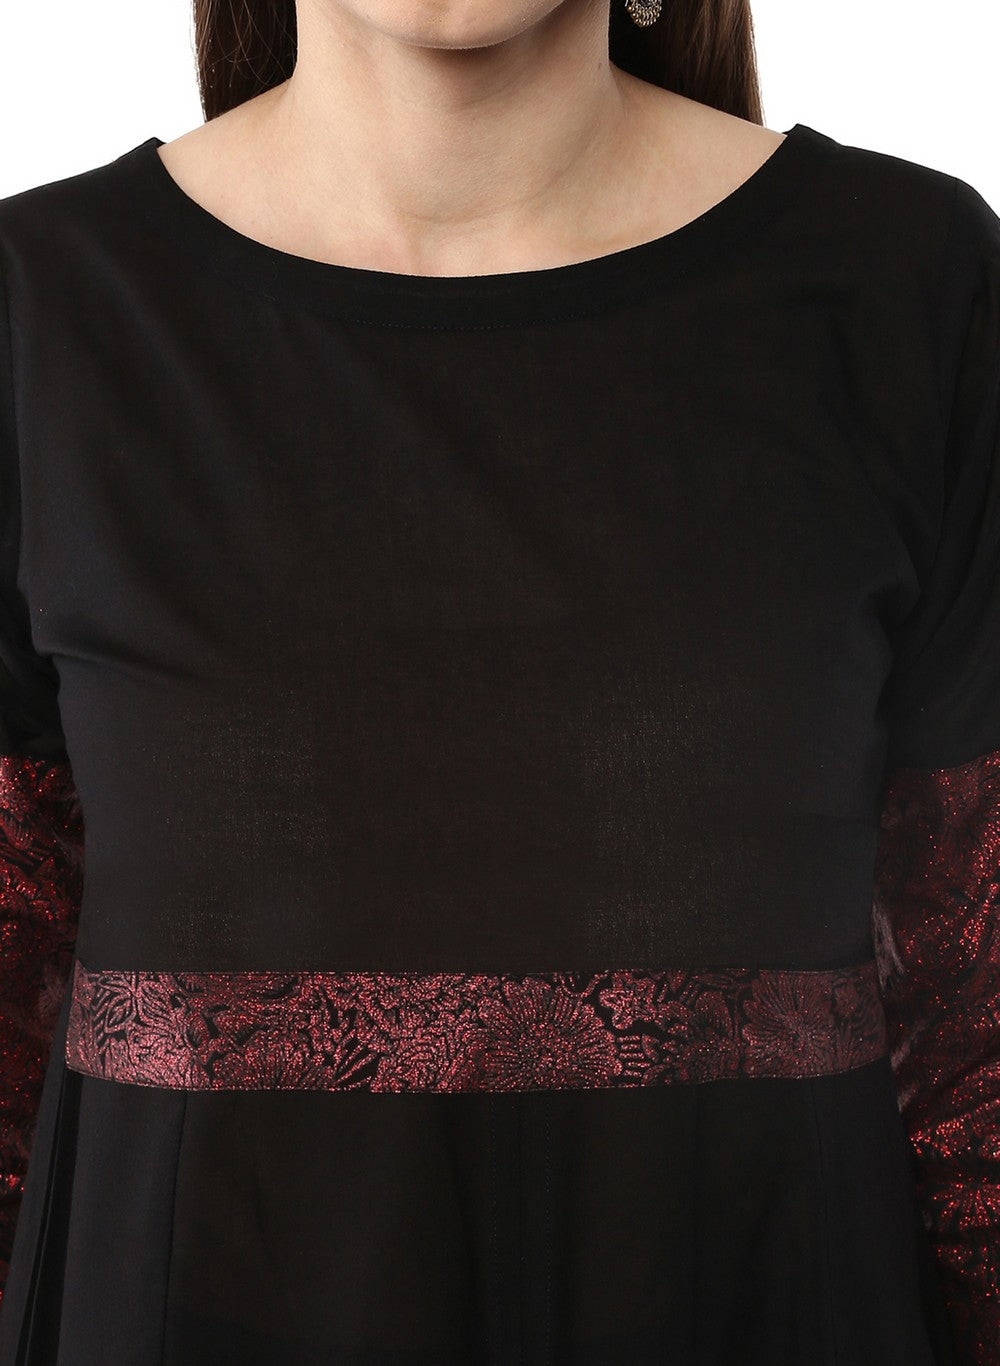 Ahalyaa Black & Red Cotton Blend Floor Length Anarkali Kurta Dress